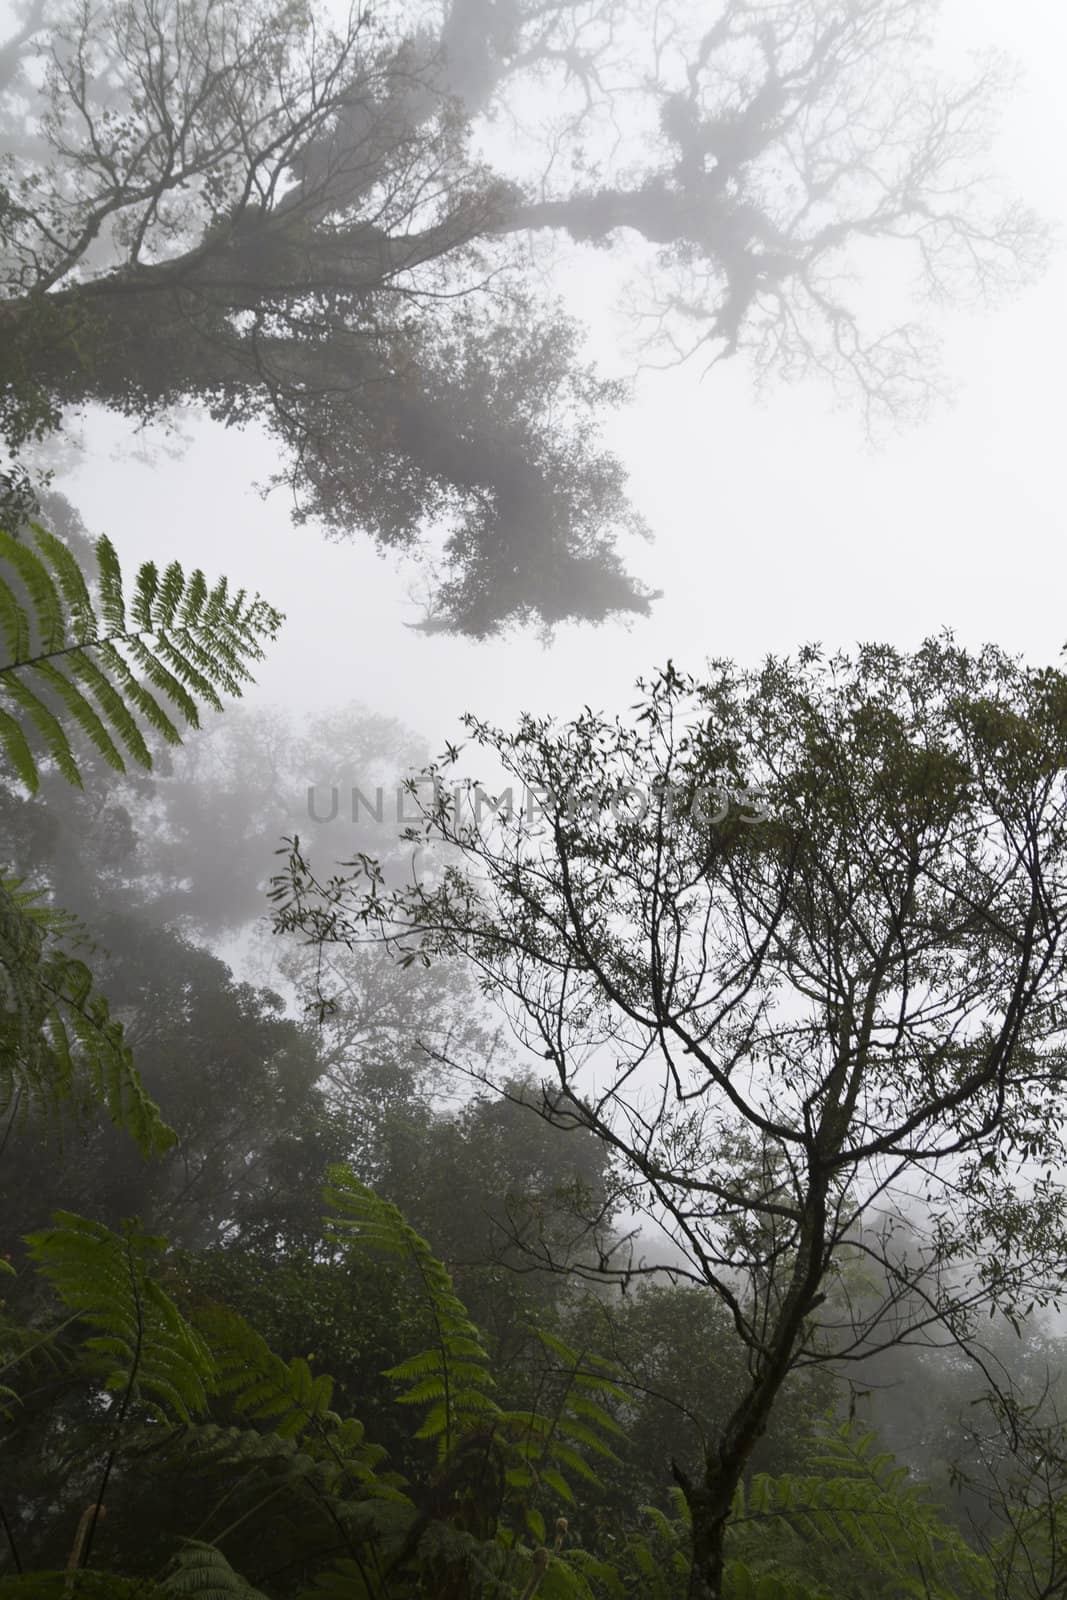 Raintree in The Fog by azamshah72